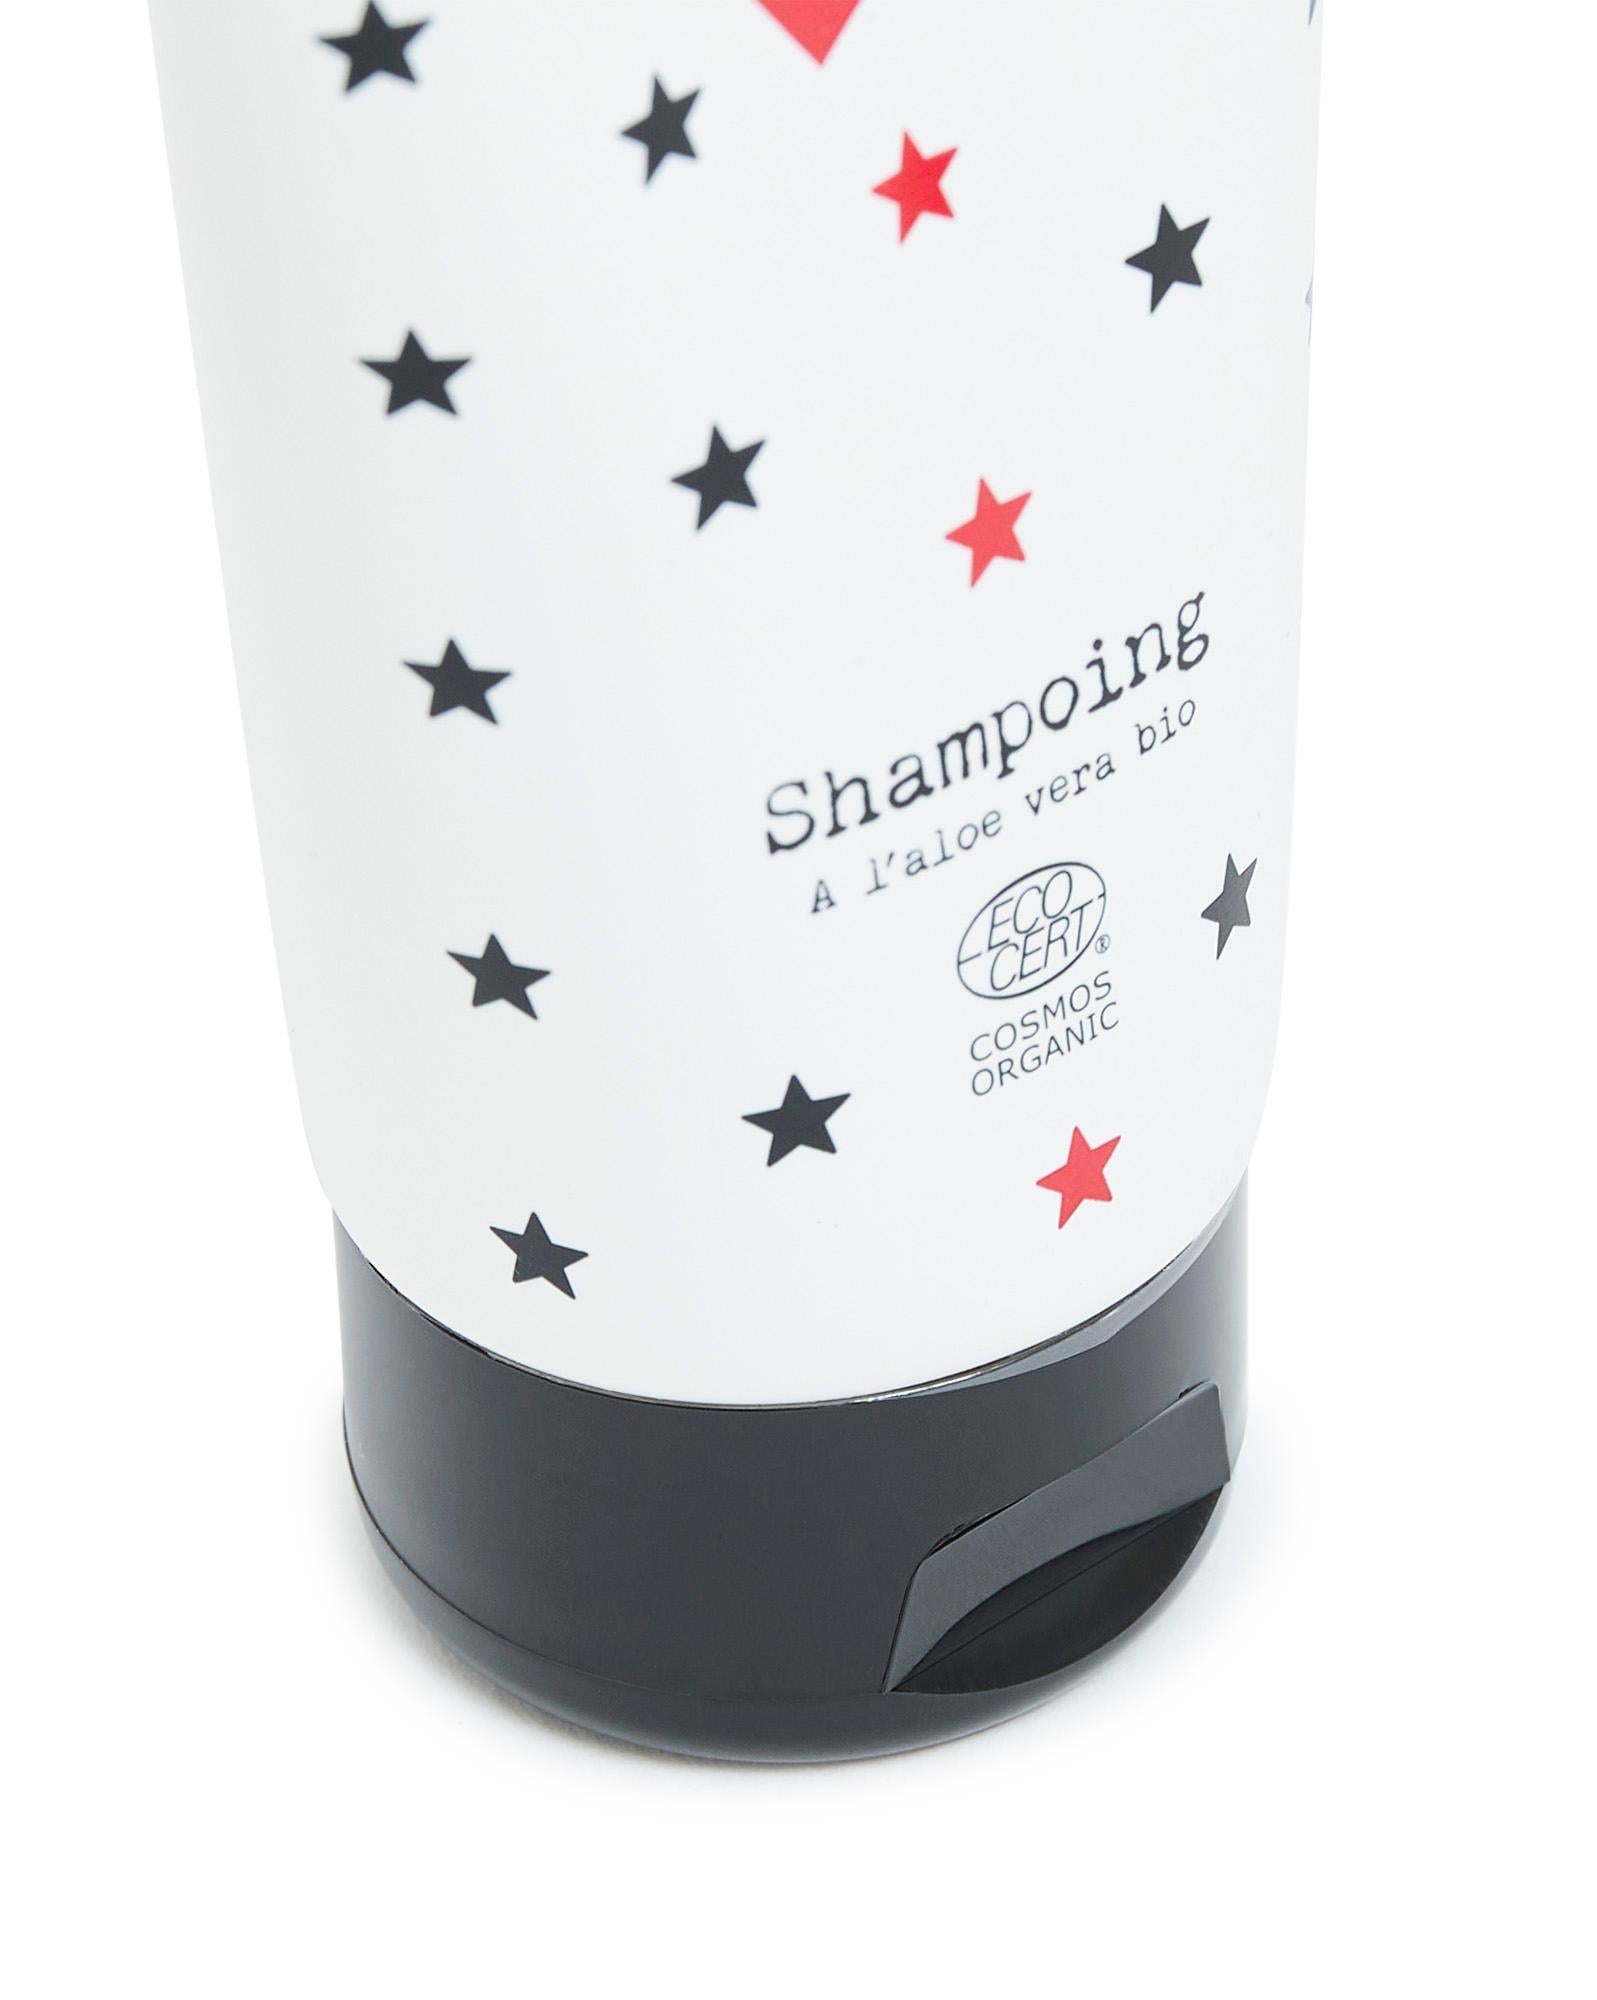 Shampoing Cosmos Organic 100 ml